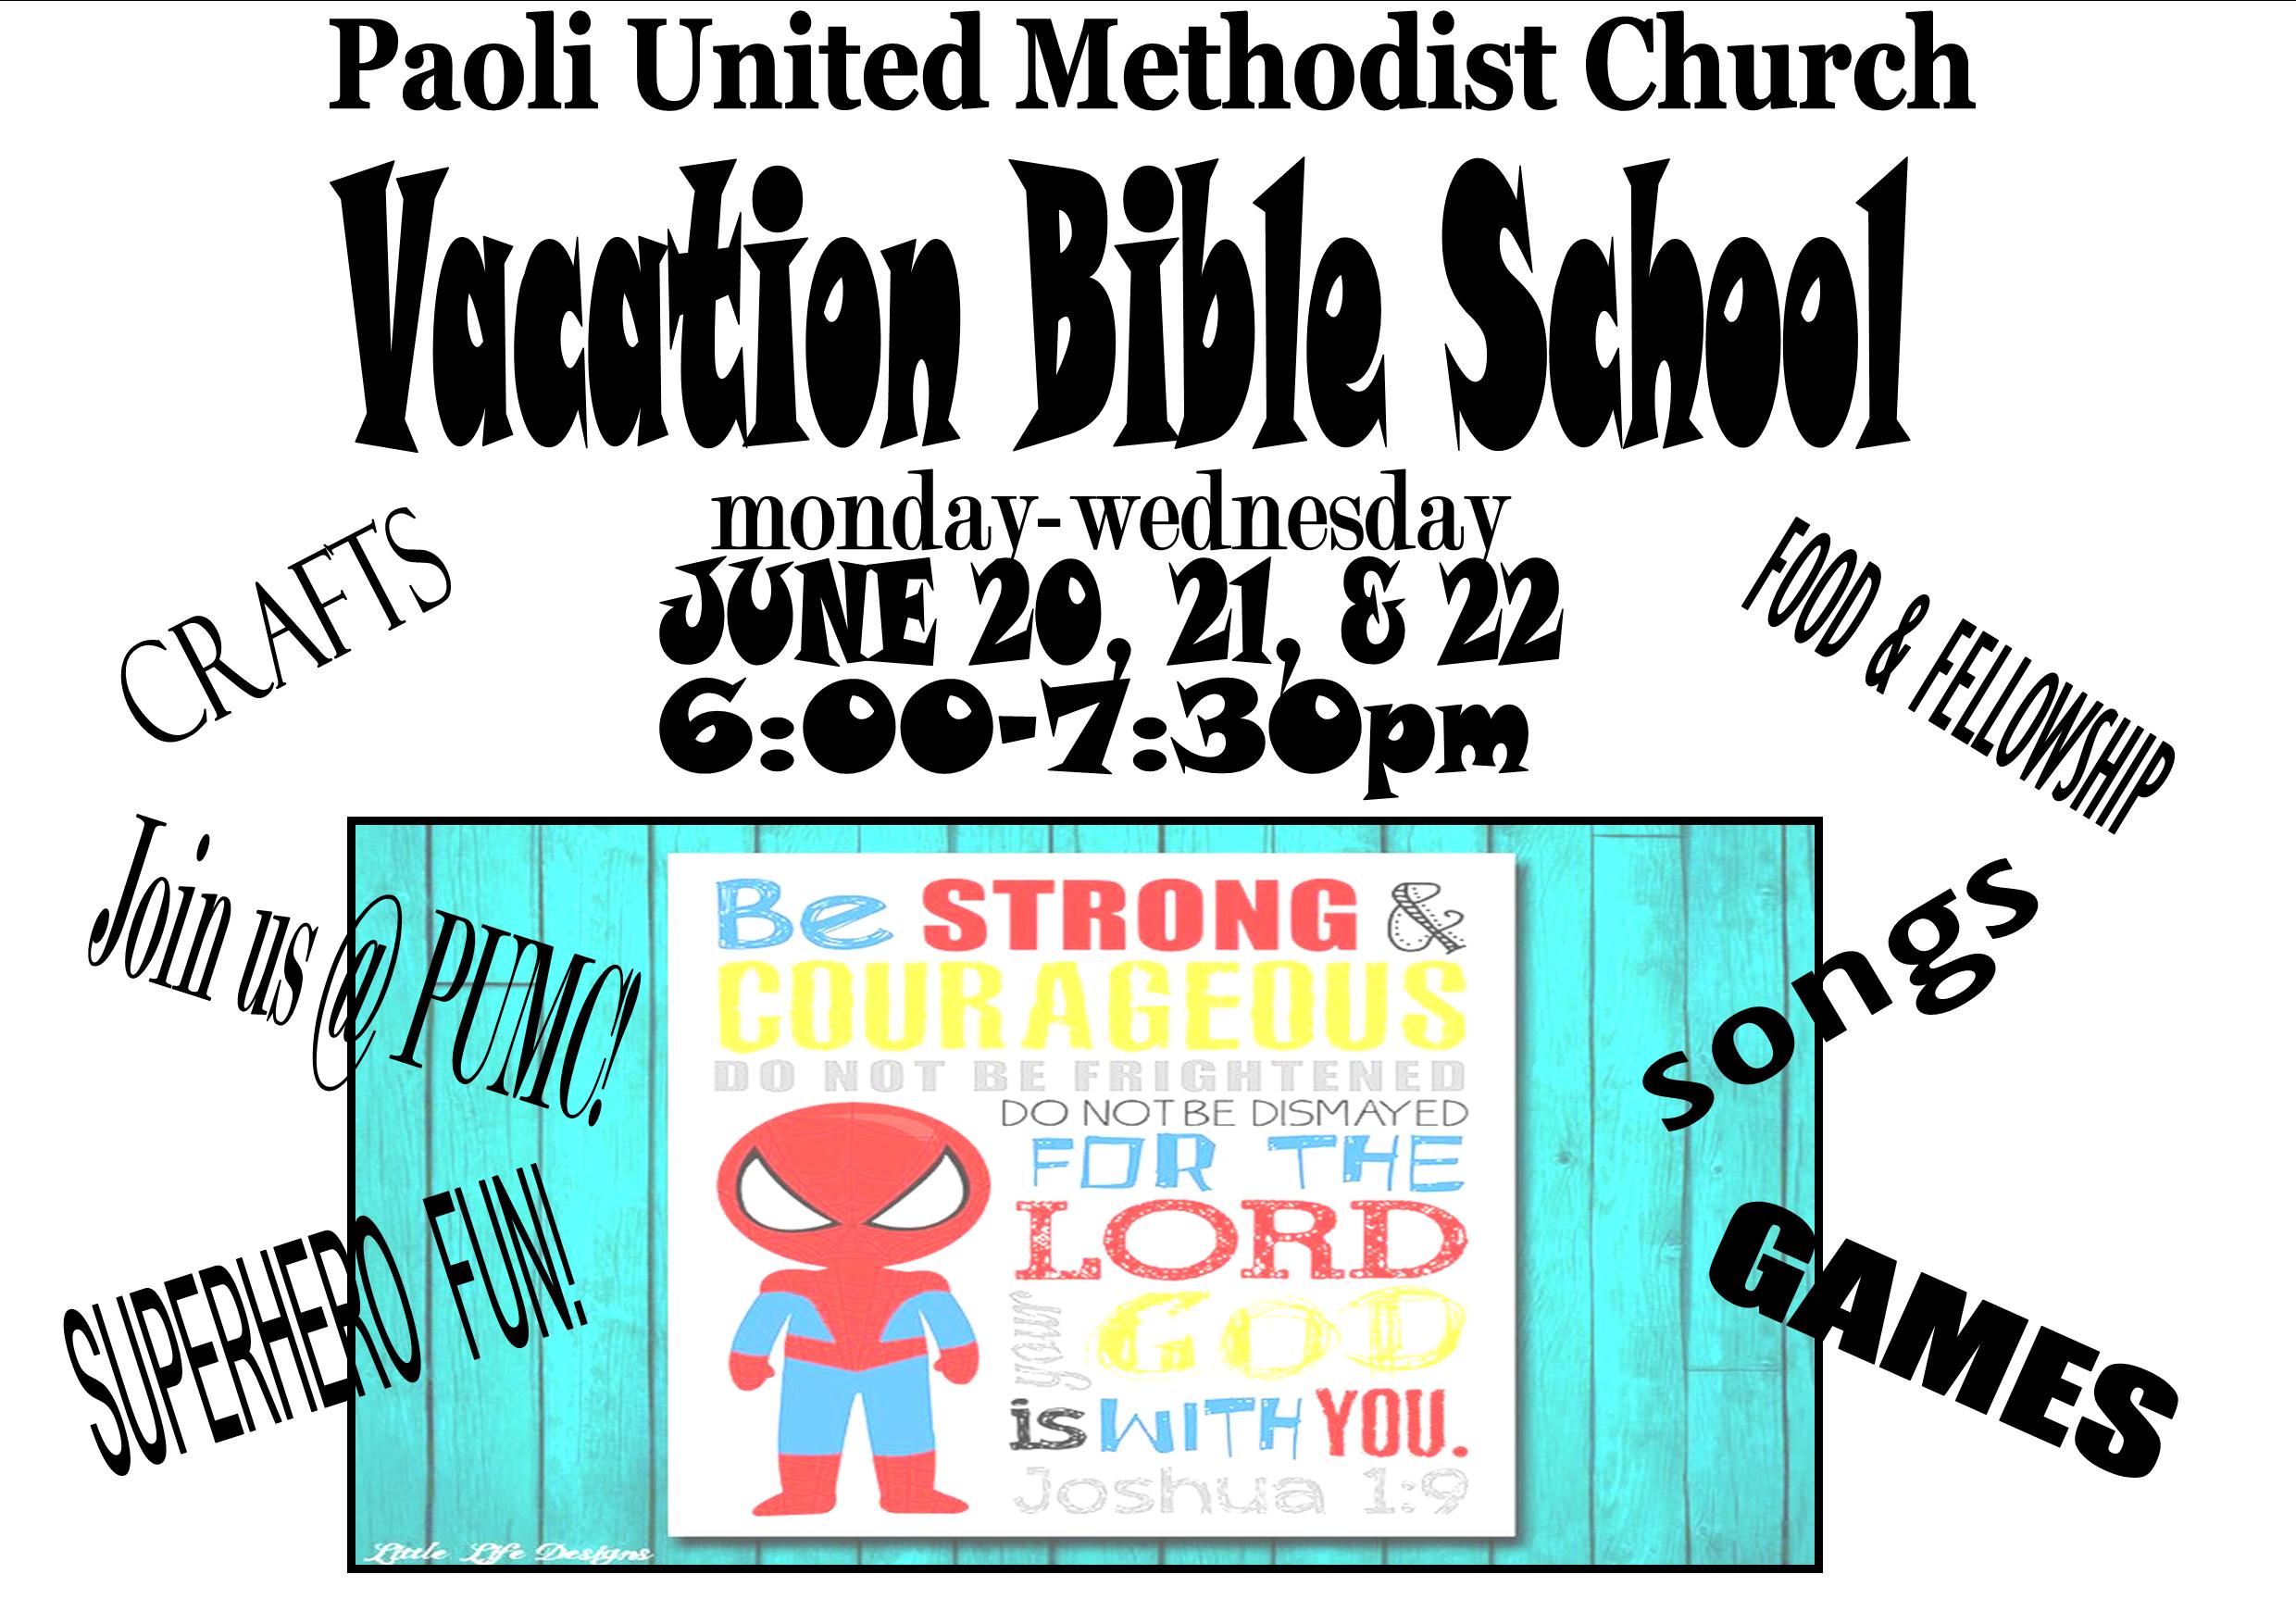 Paoli UMC Vacation Bible School announcement for June 2016.